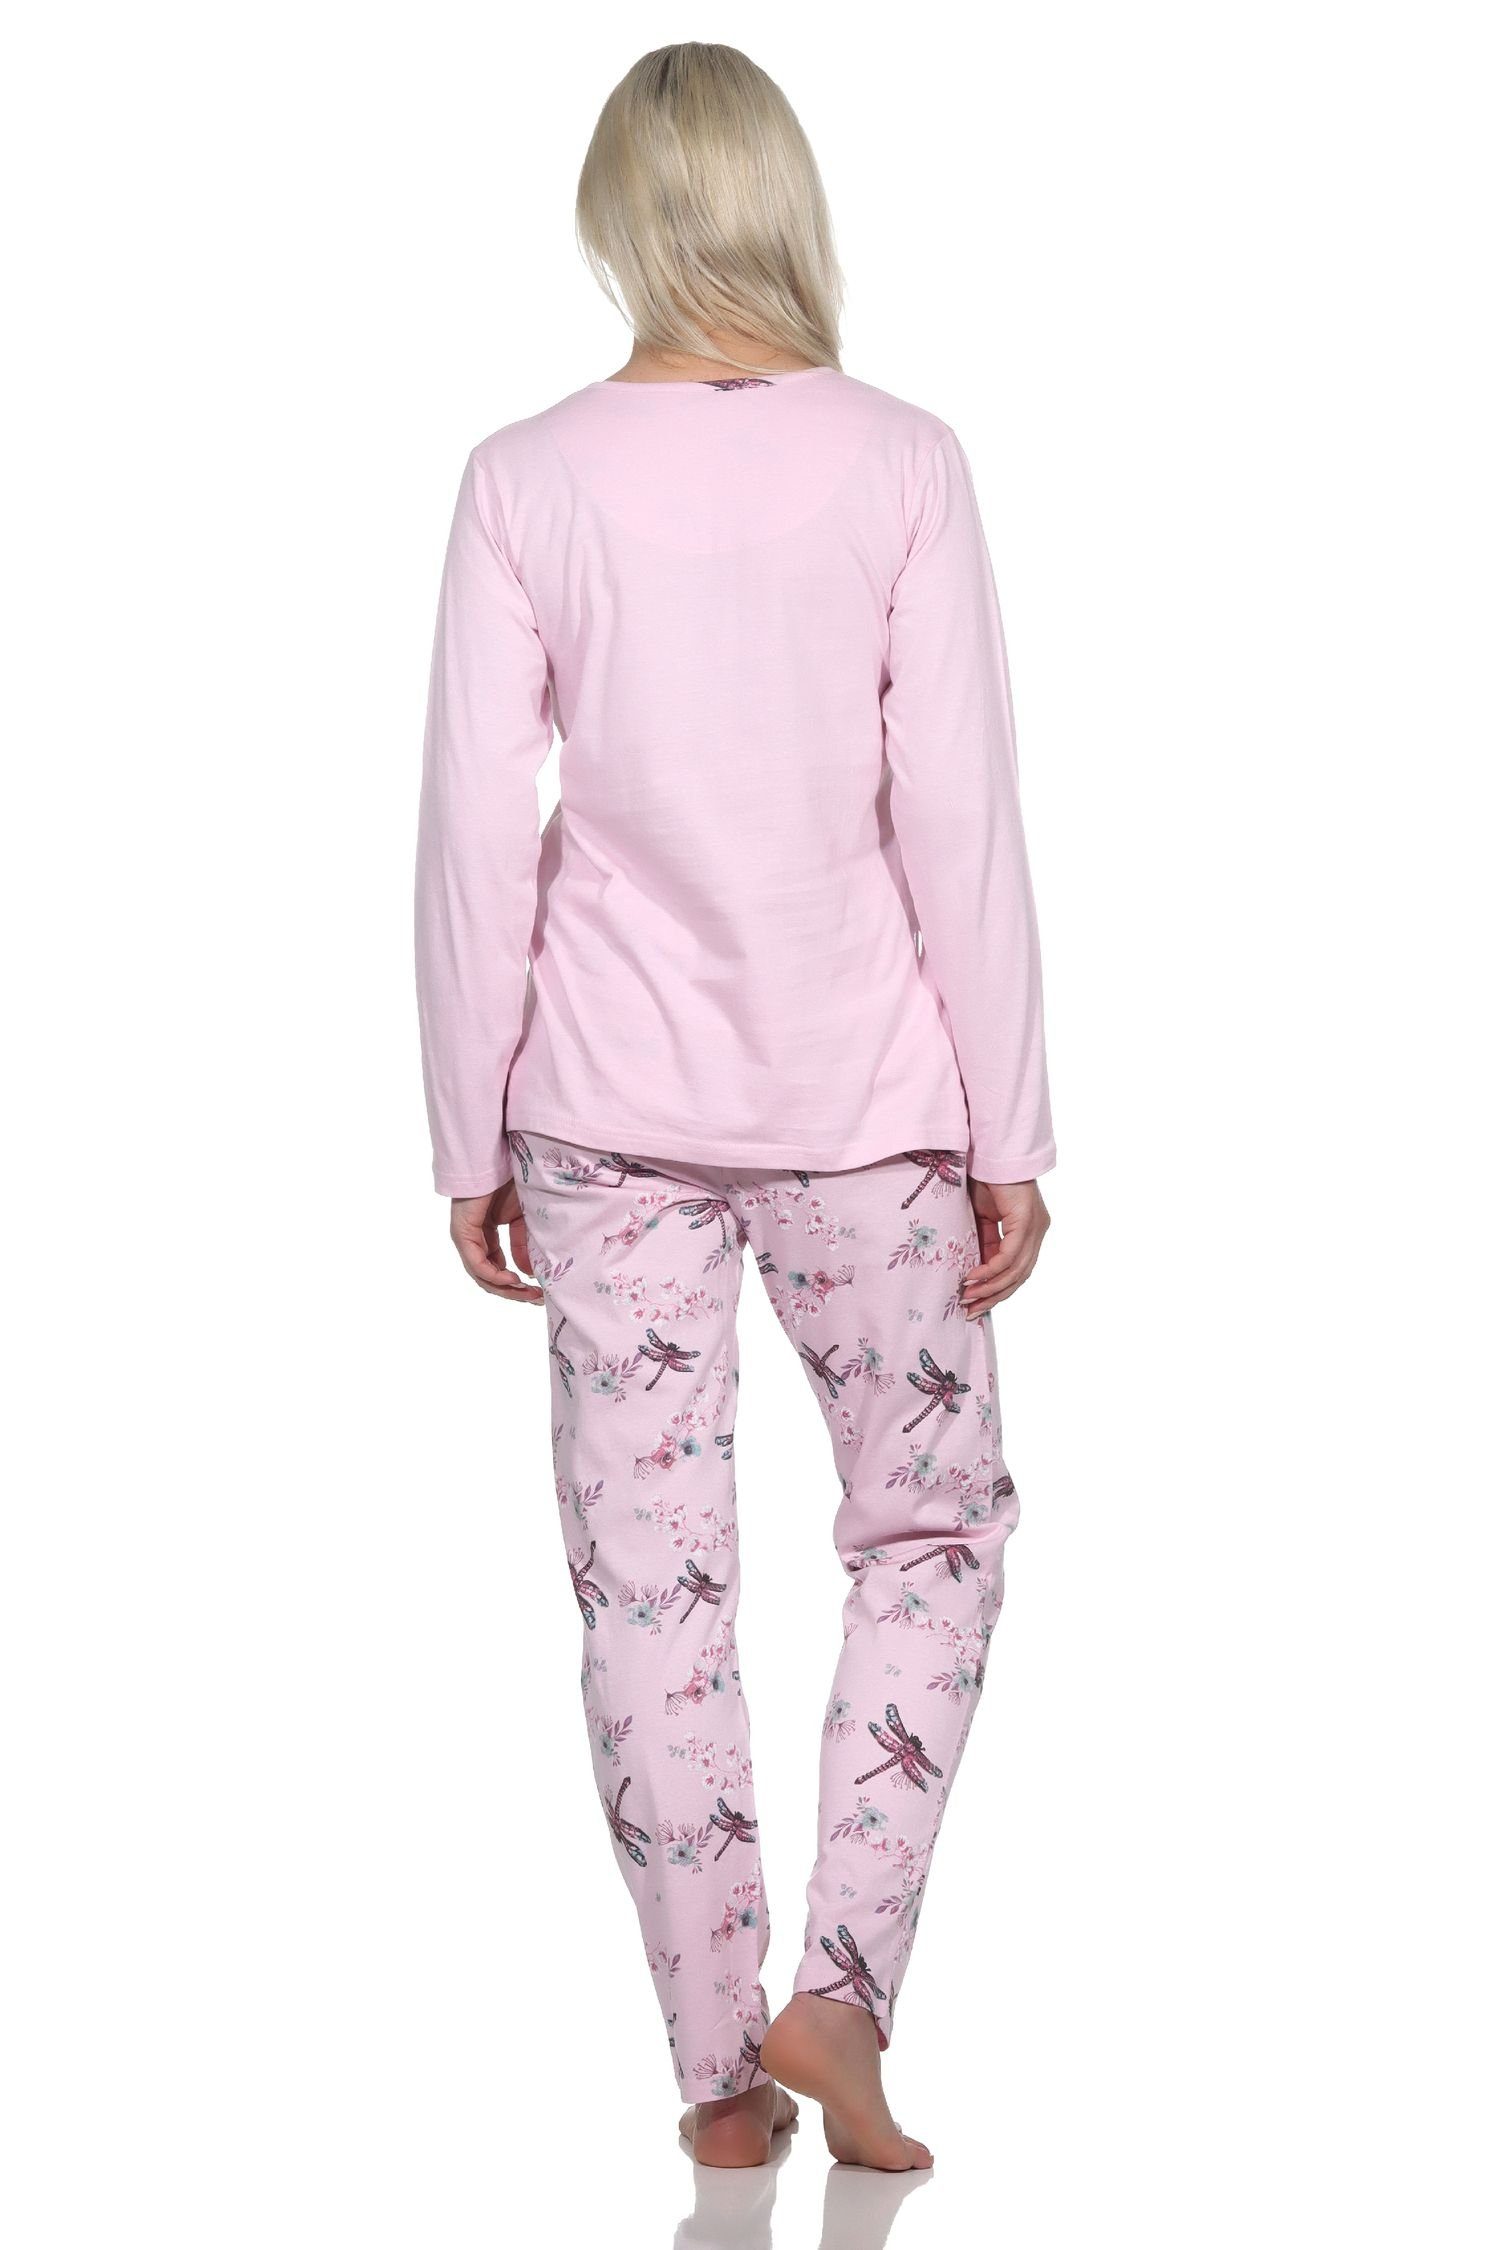 Damen Pyjamahose Schlafanzug floralem mit Normann langarm Pyjama rosa in Pyjama Print